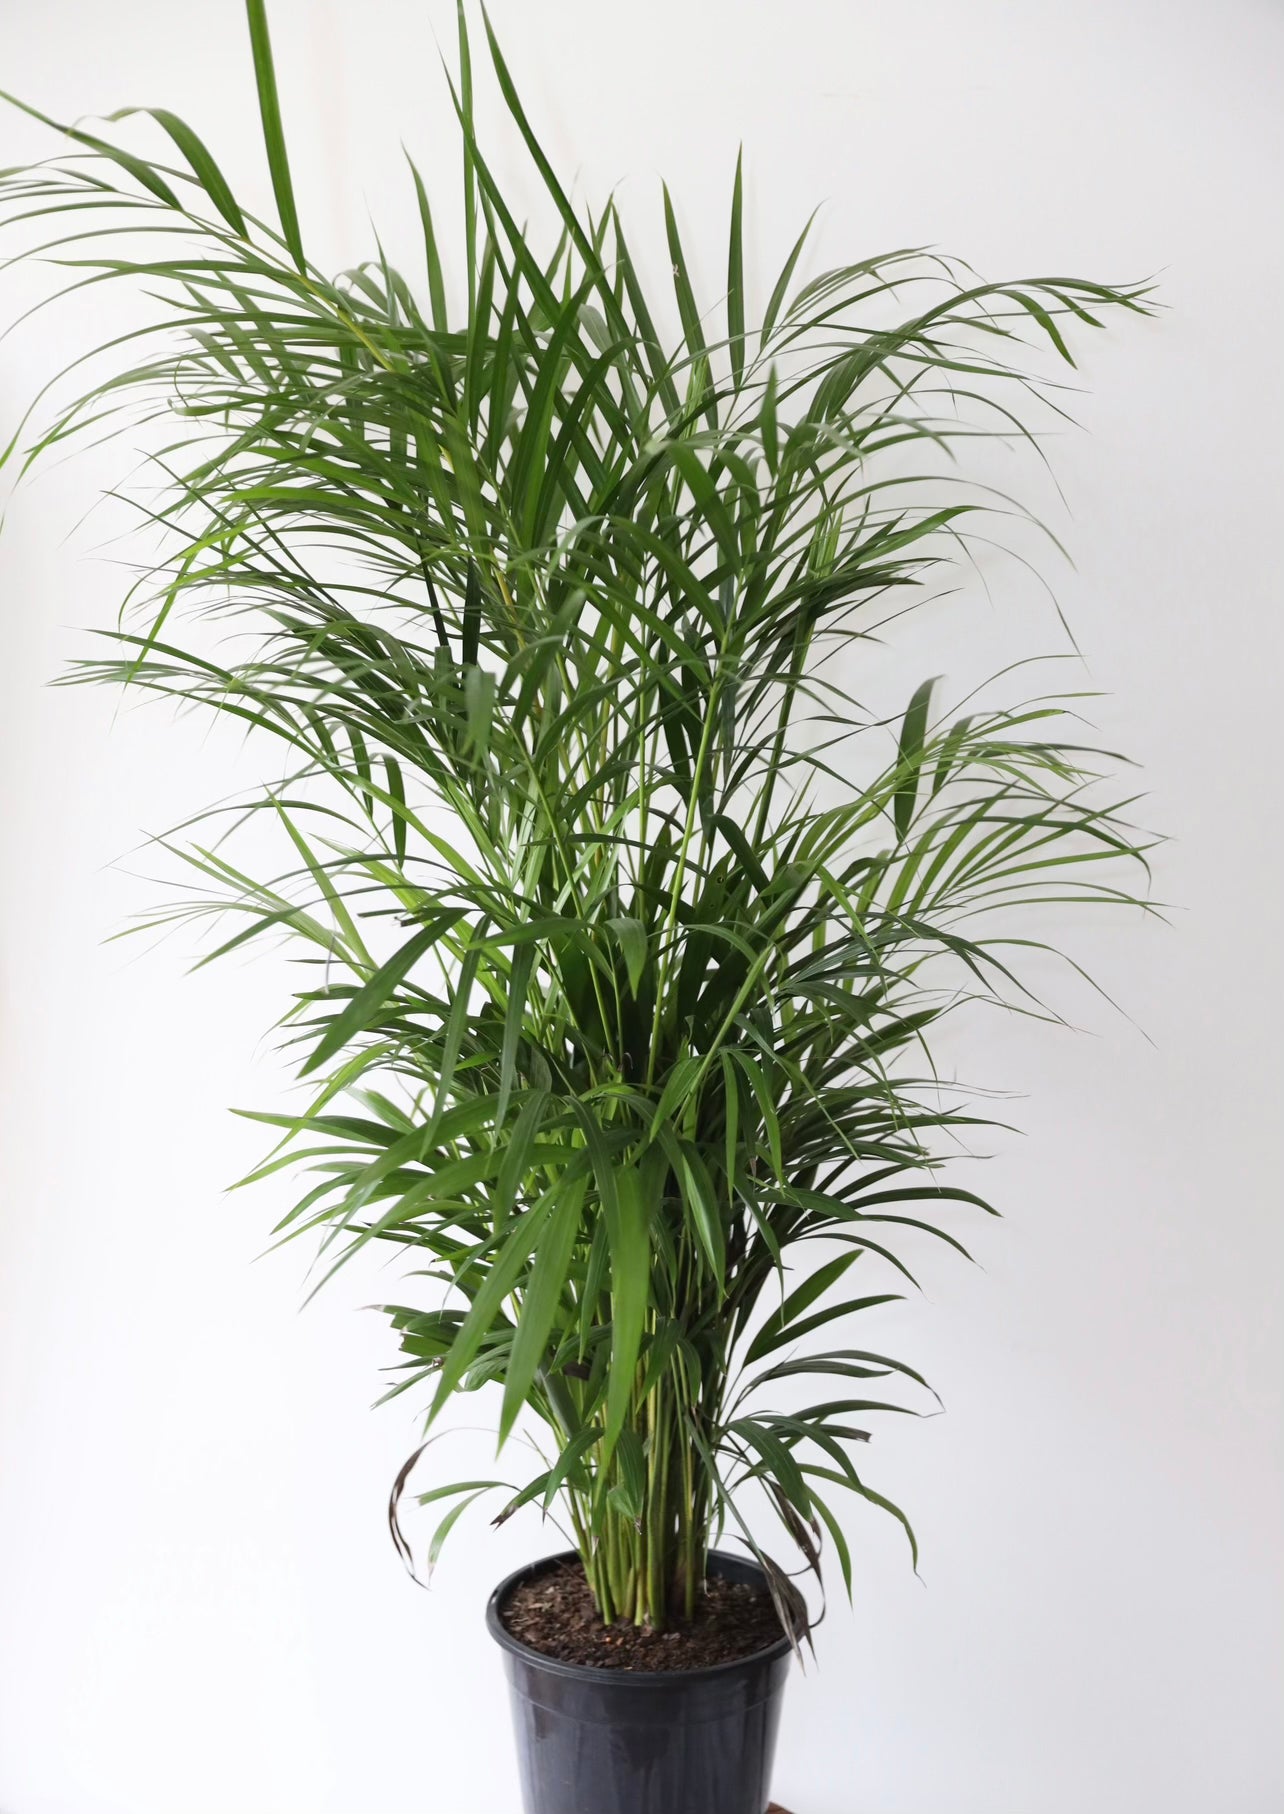 The Golden Cane Palm Plant (Dypsis Lutescens)